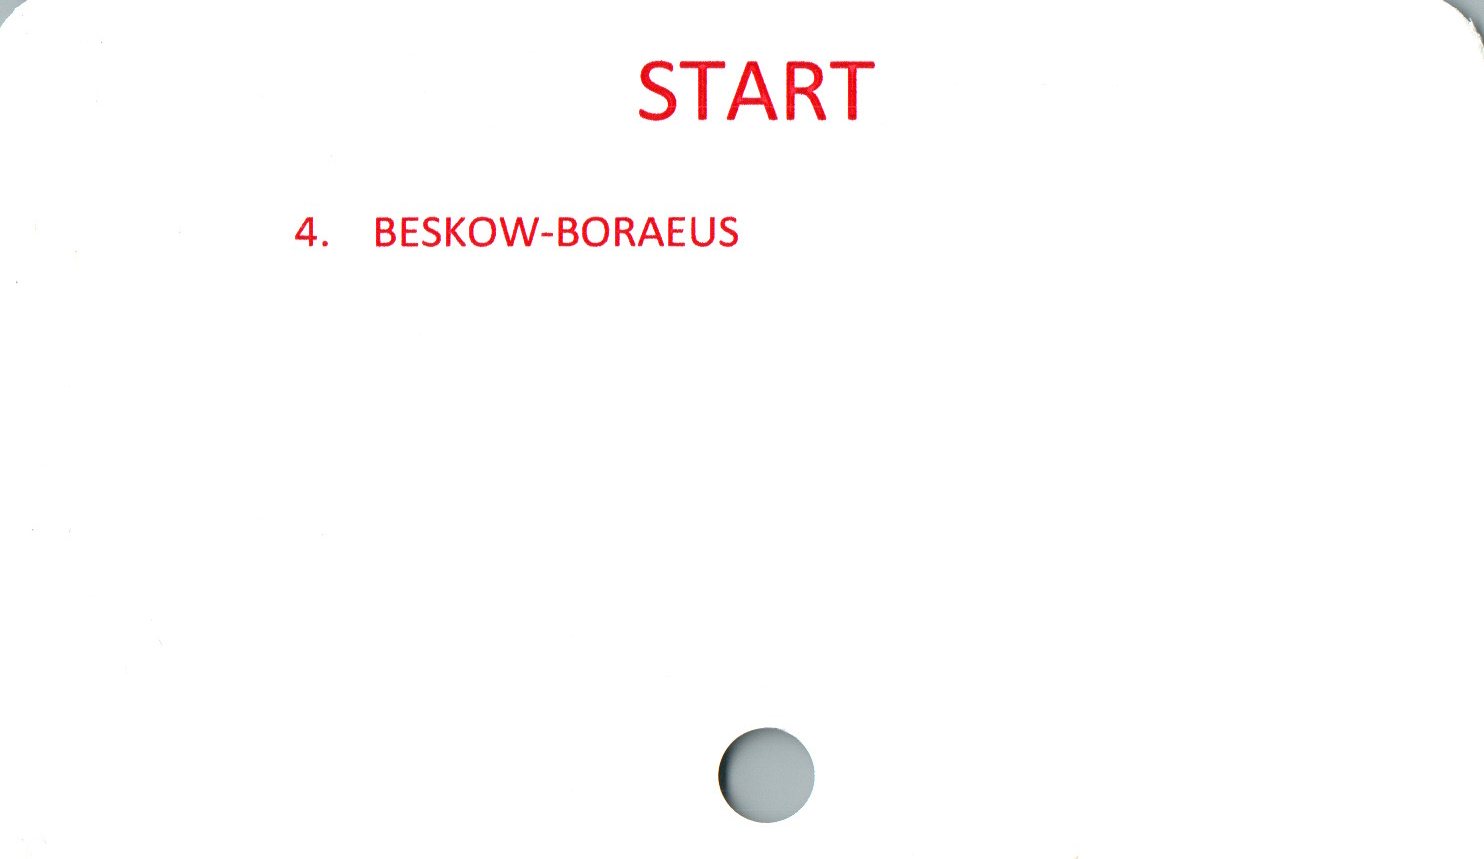  ﻿START

4. BESKOW-BORAEUS